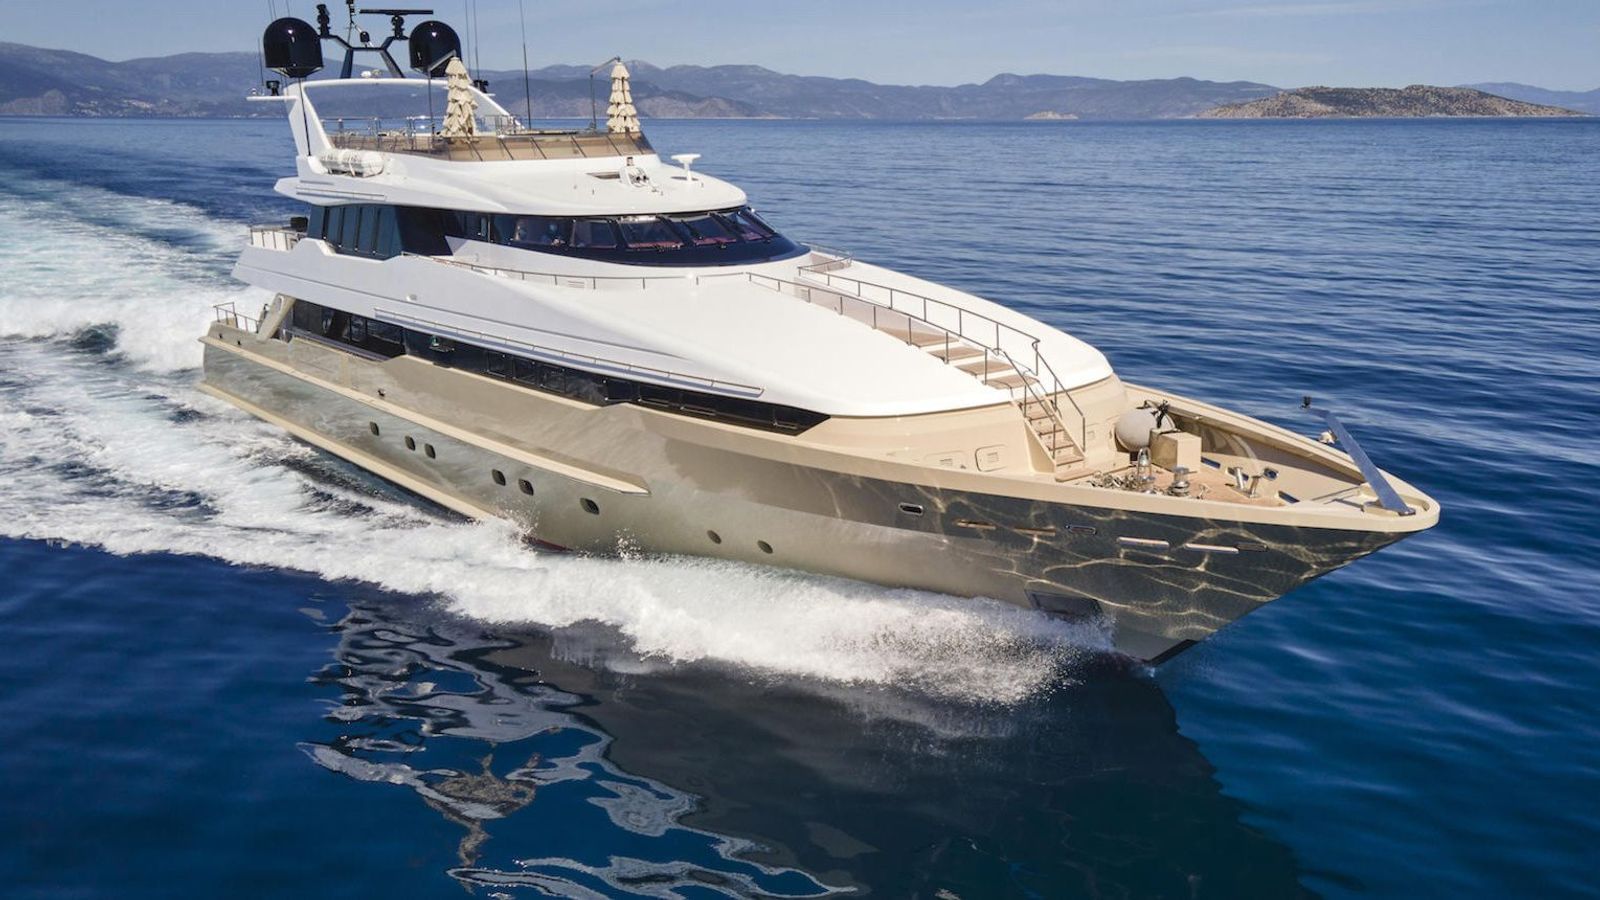 daloli yacht for sale